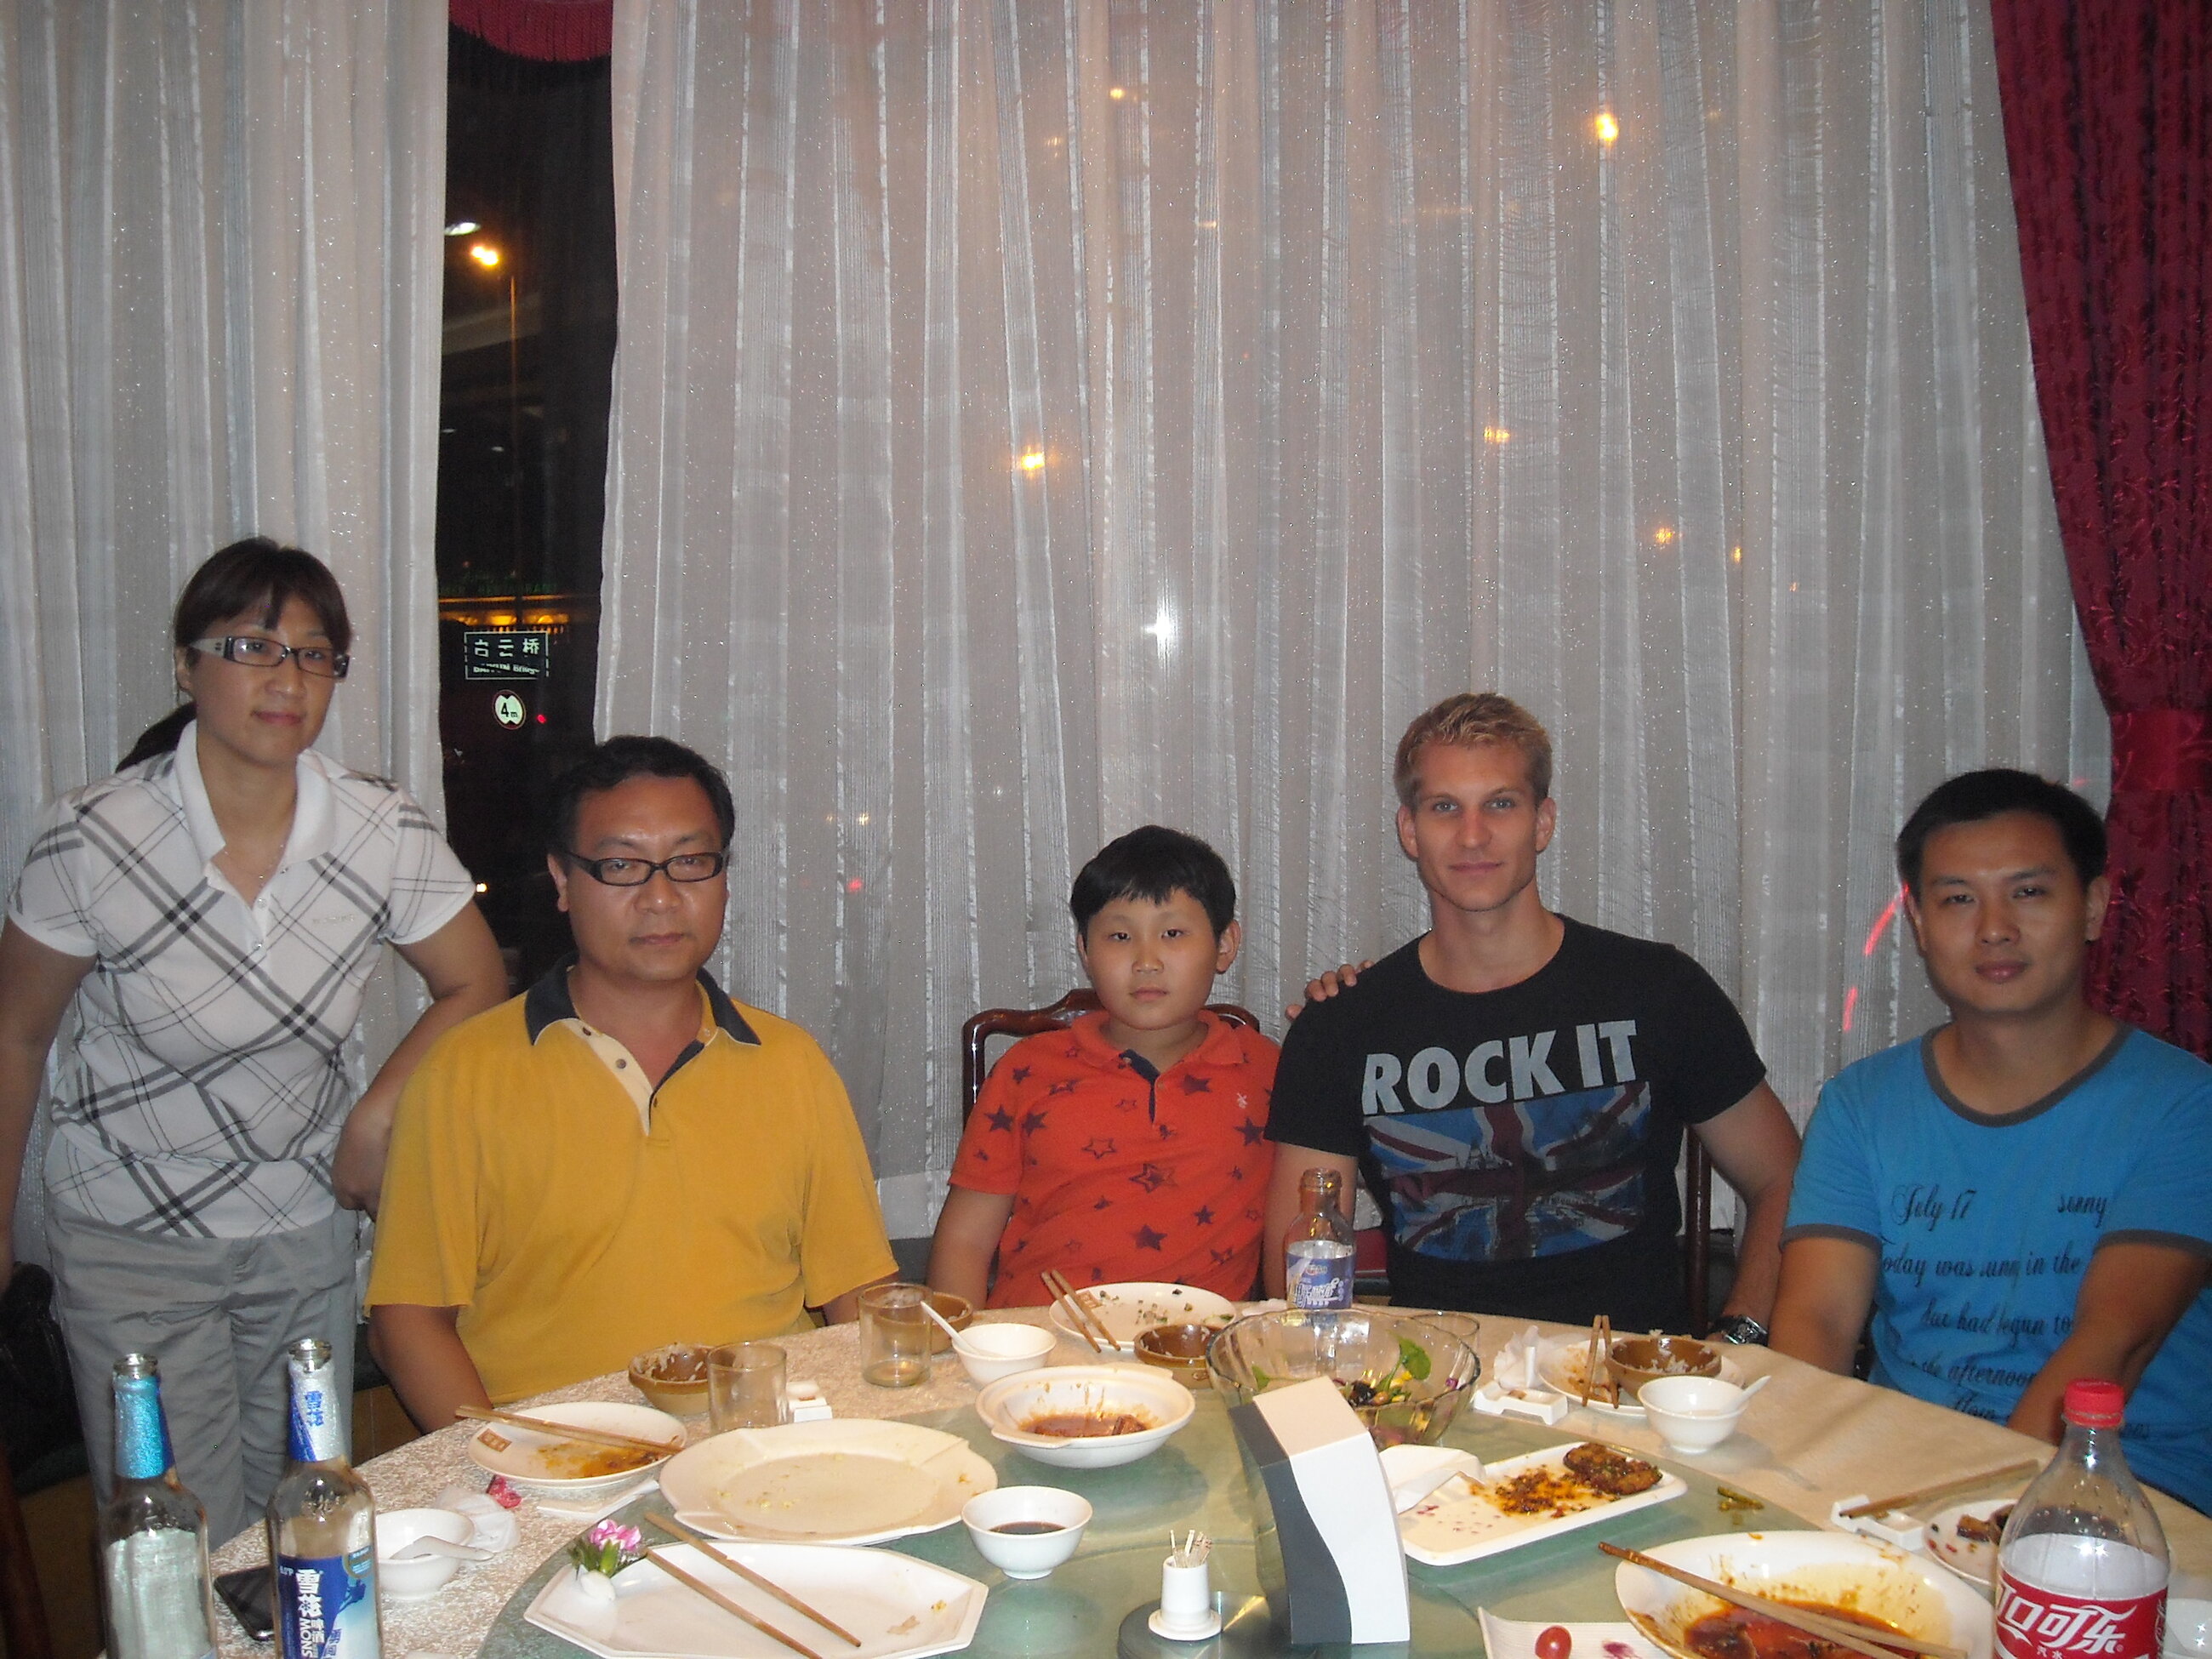 My host family arranged by GoAbroadChina in Beijing 